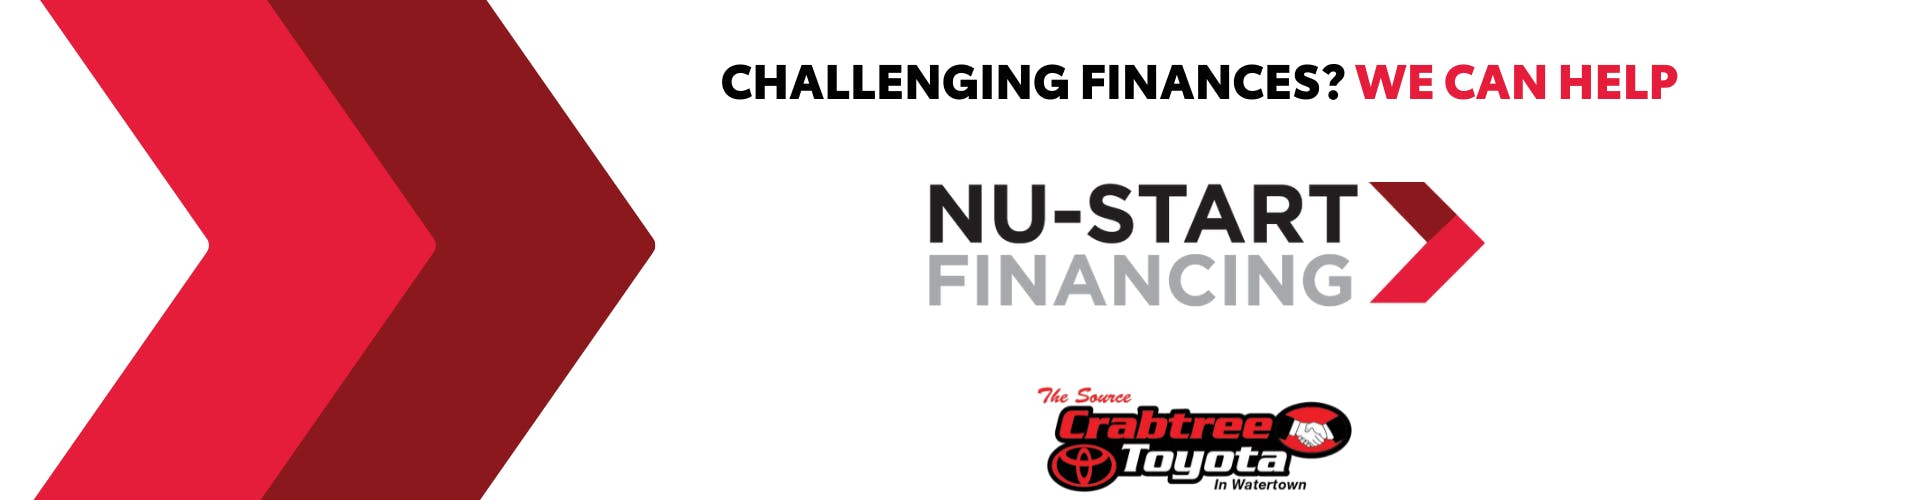 NuStart Financing